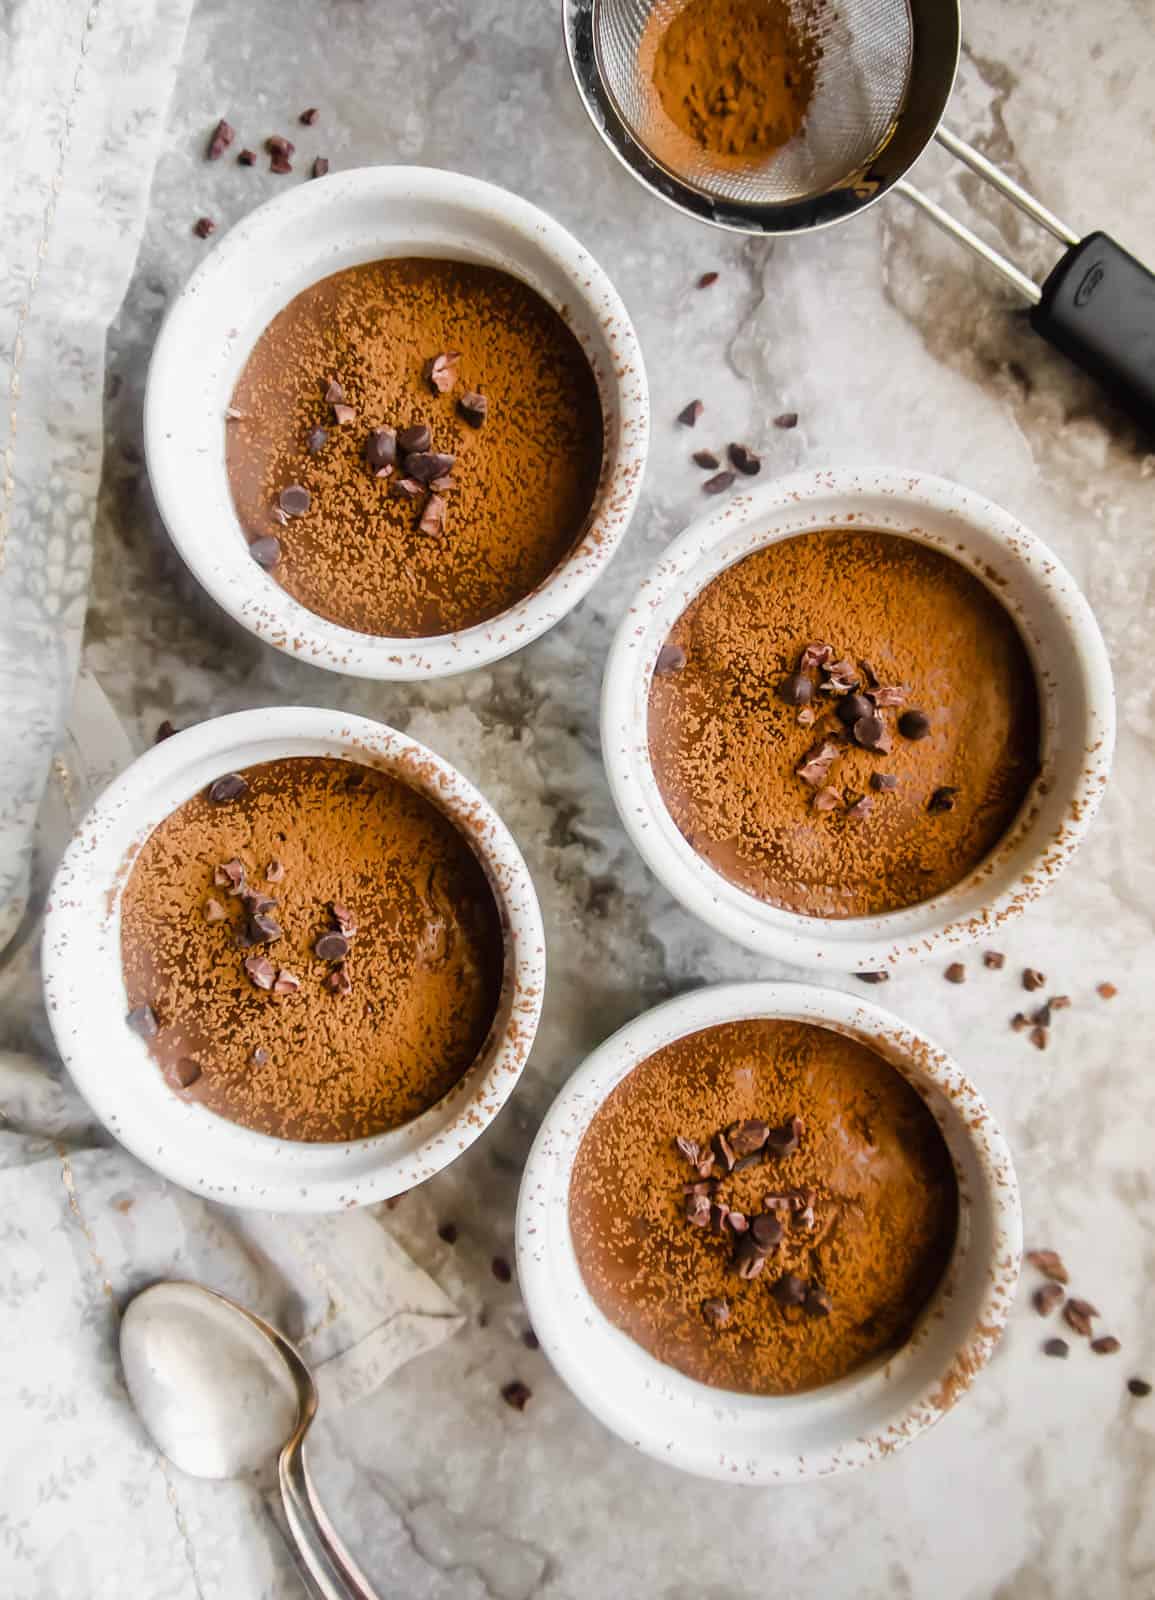 Paleo chocolate pudding in ramekins.